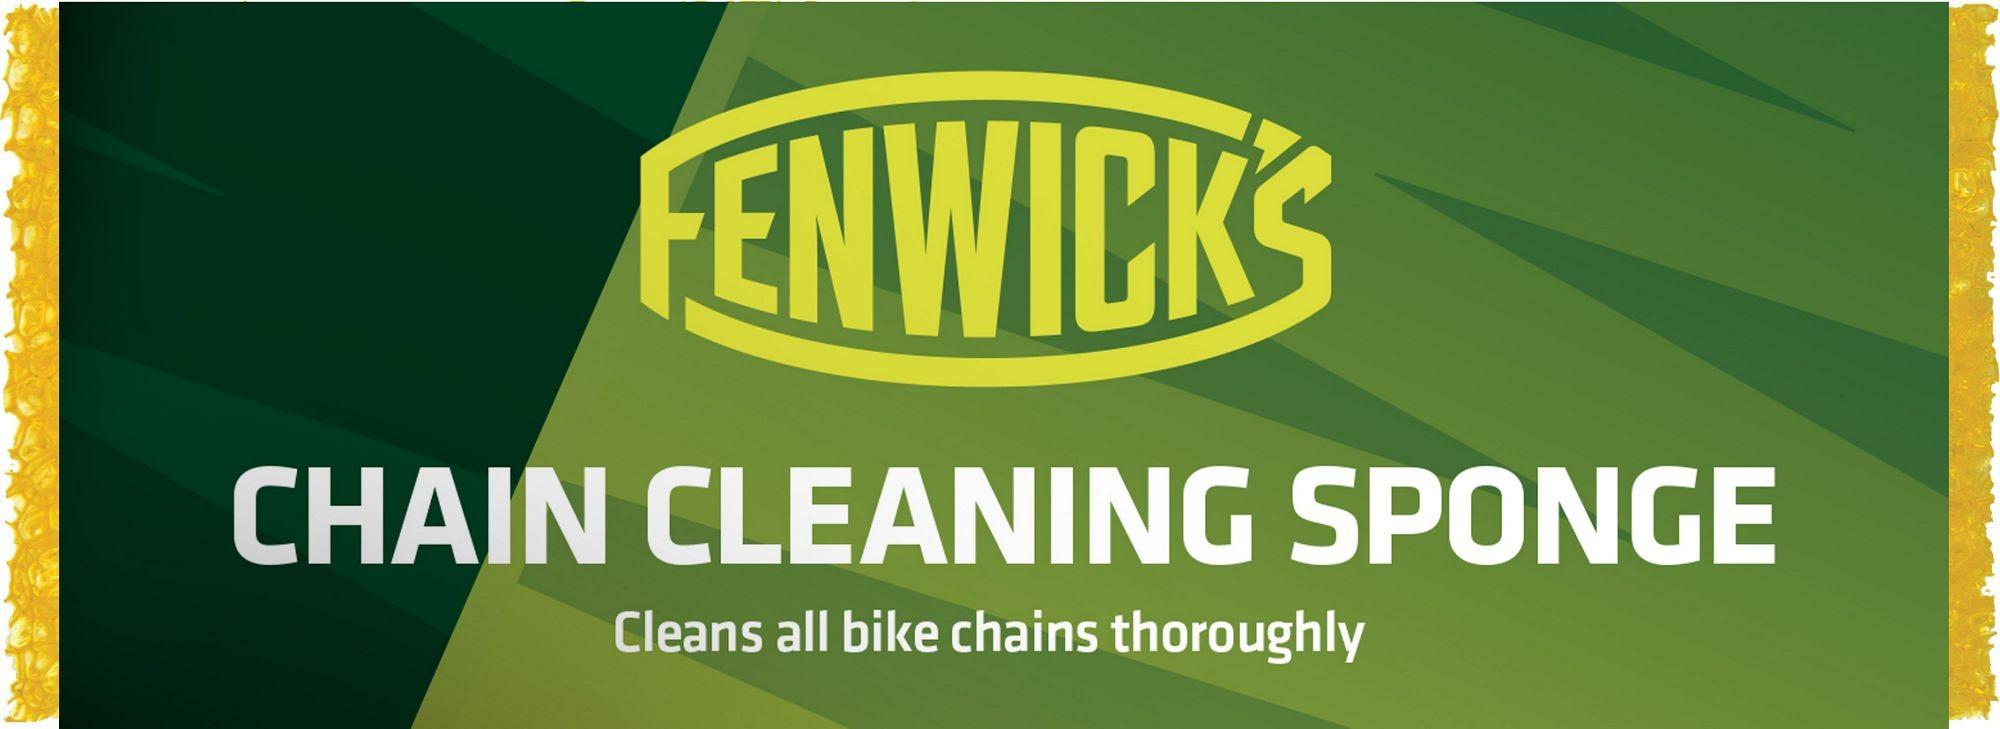 Fenwicks Chain Cleaning Sponge - Yellow